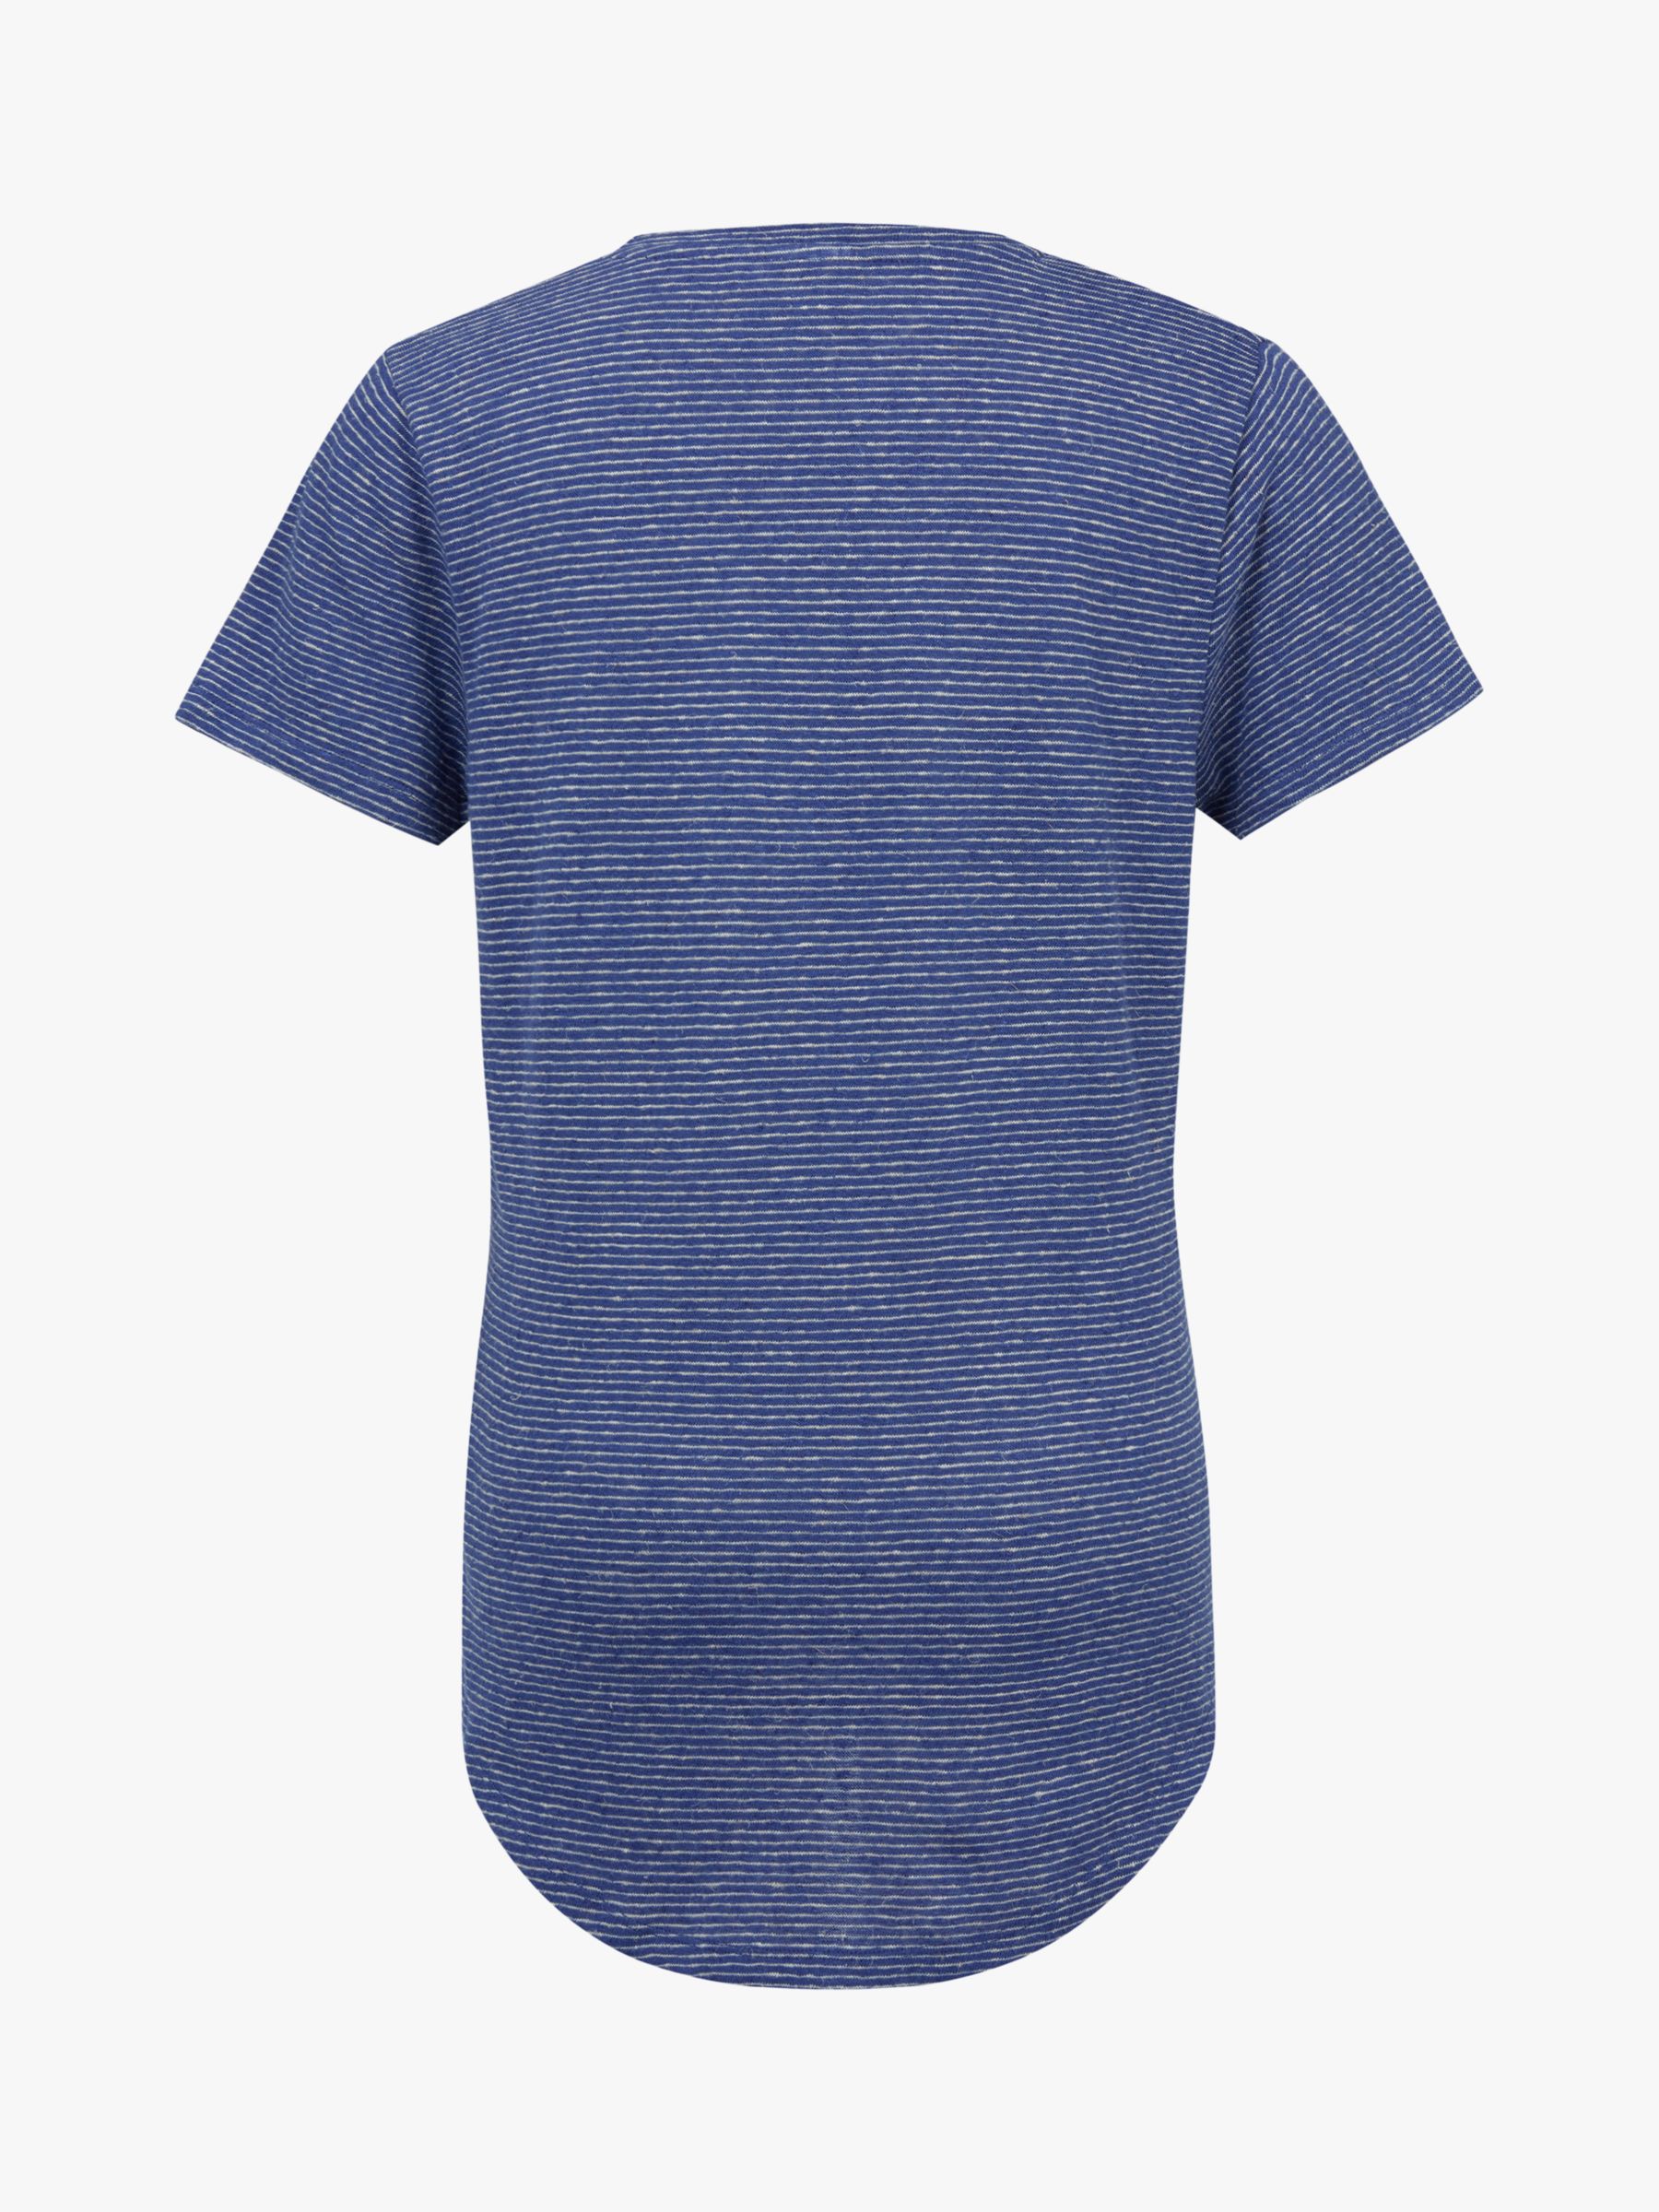 Buy Celtic & Co. Linen Cotton Blend Striped Scoop Neck T-Shirt Online at johnlewis.com